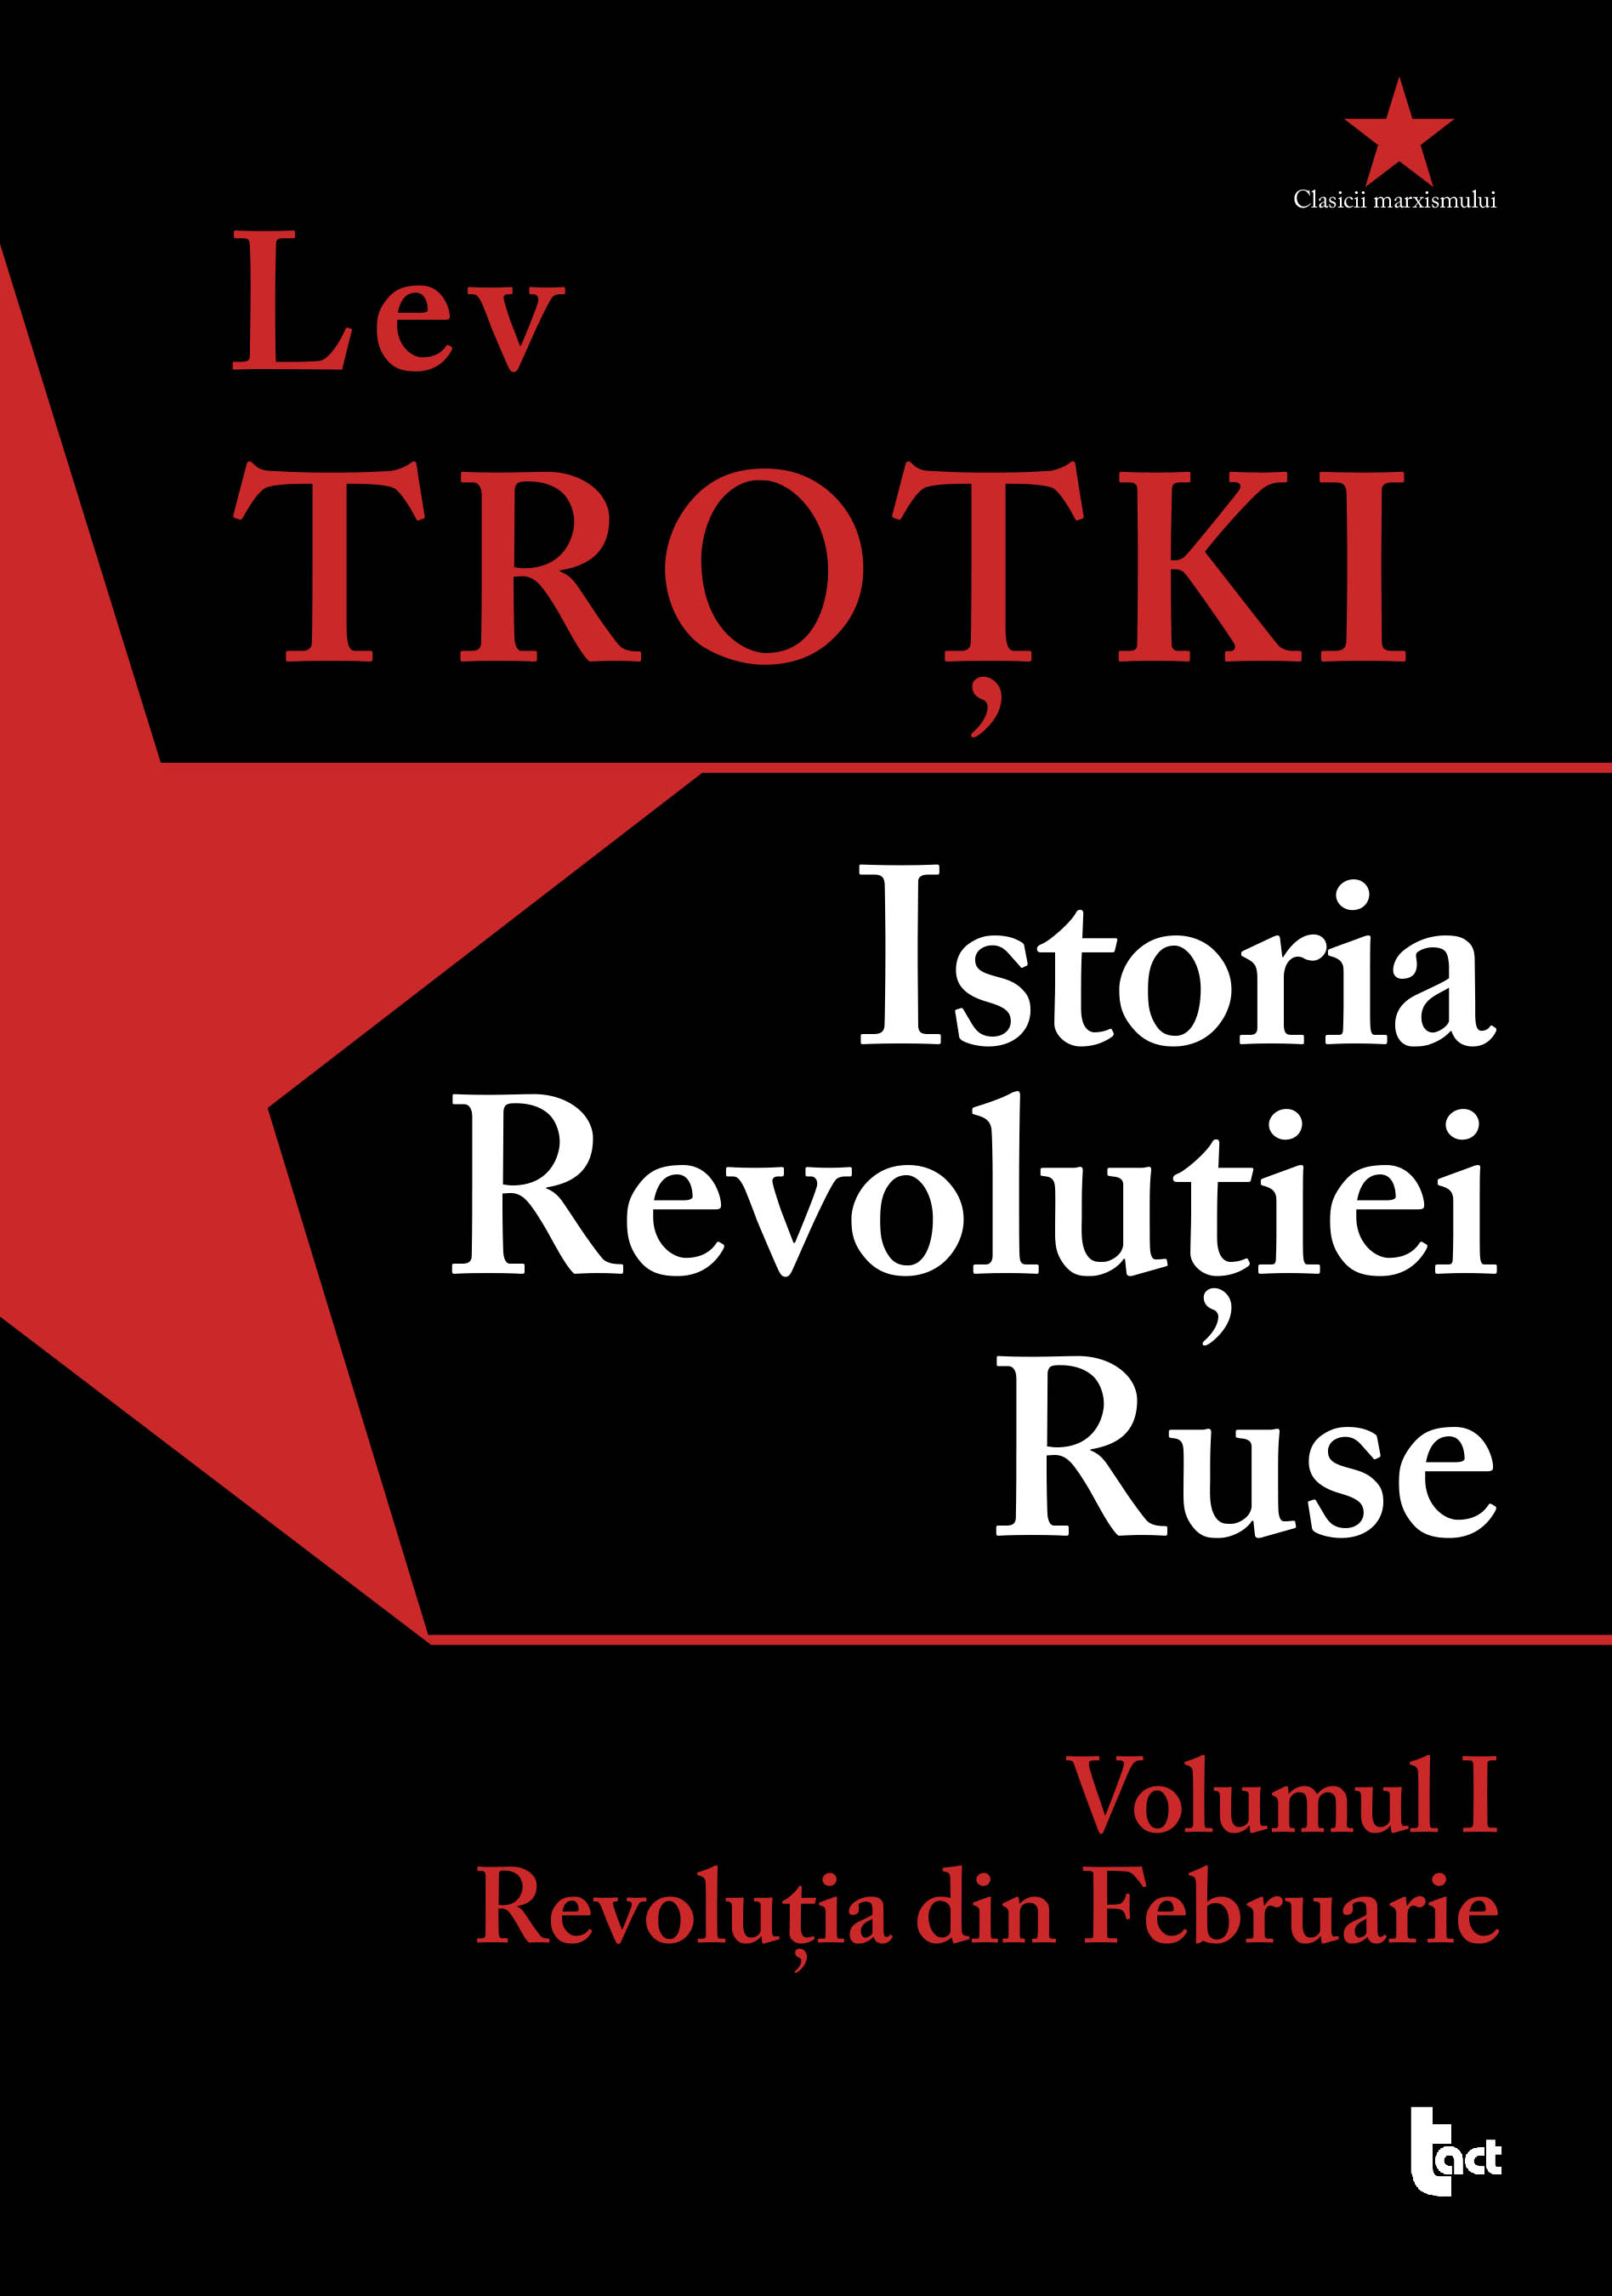 Istoria Revoluției Ruse. Volumul 1 | Lev Trotki carturesti.ro imagine 2022